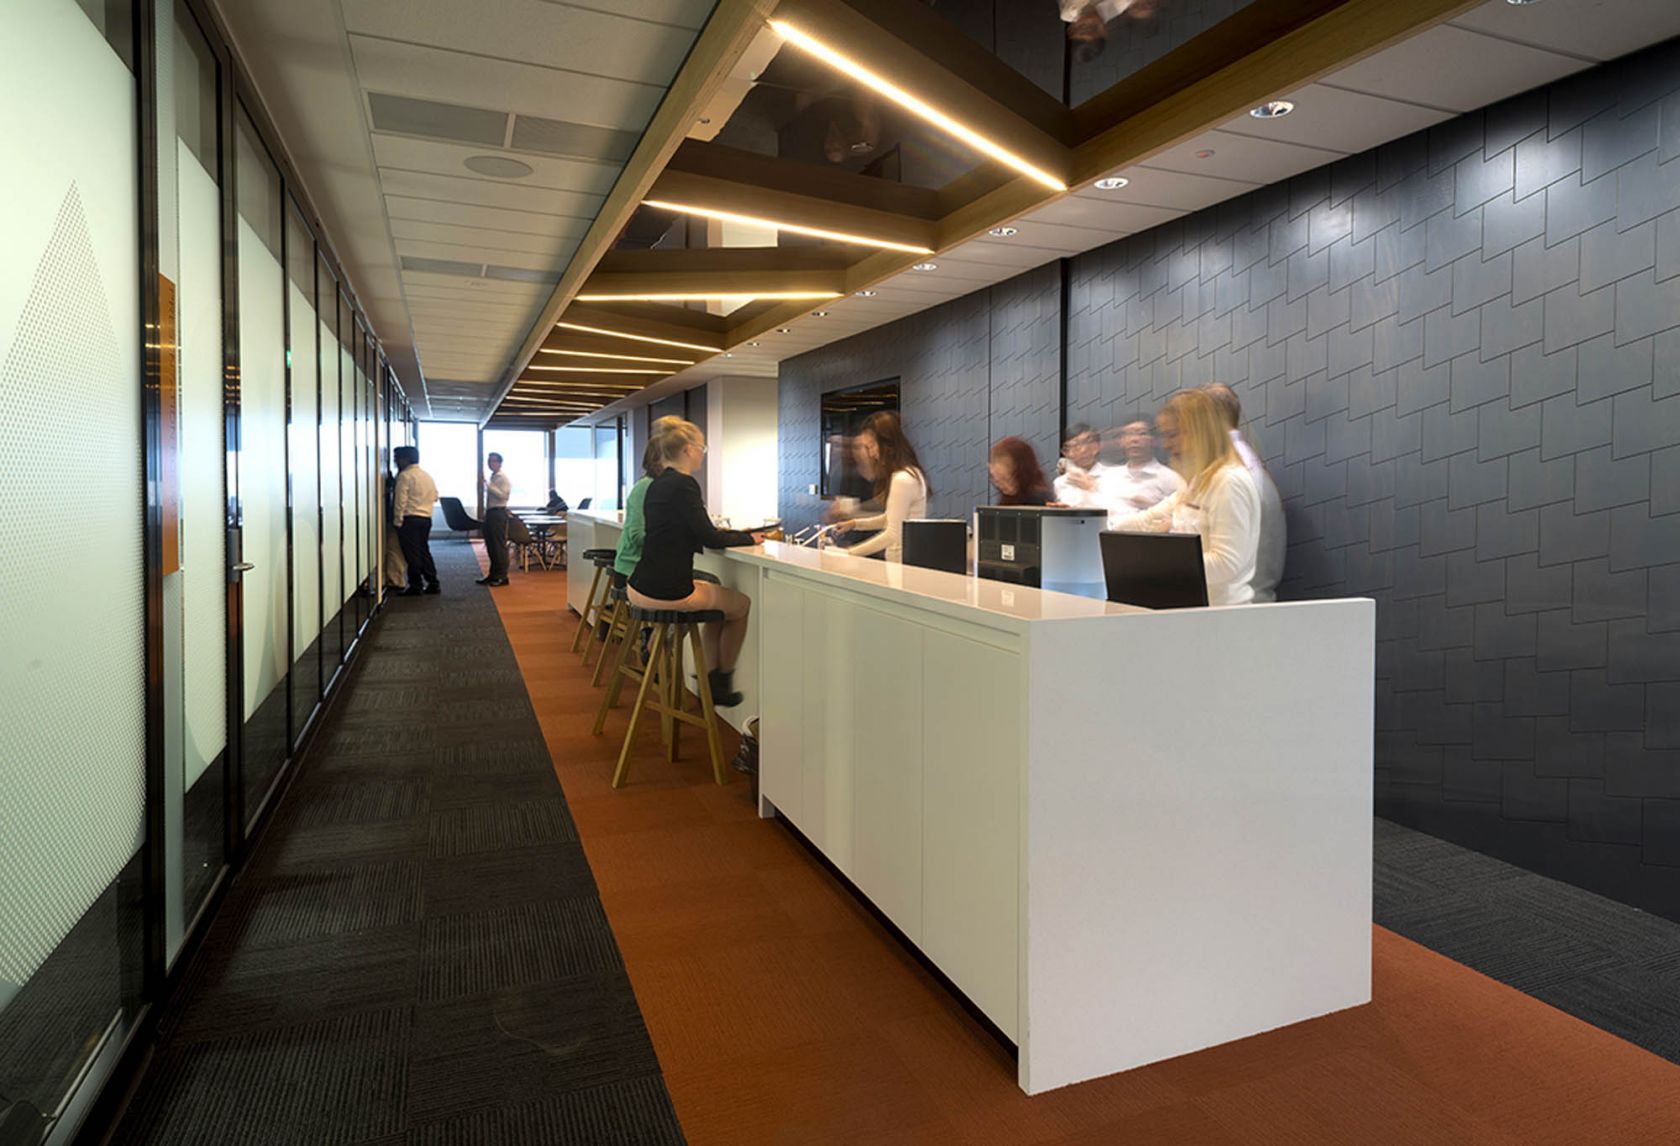 484 st kilda road workplace hub feature lighting reception brick wall fitout